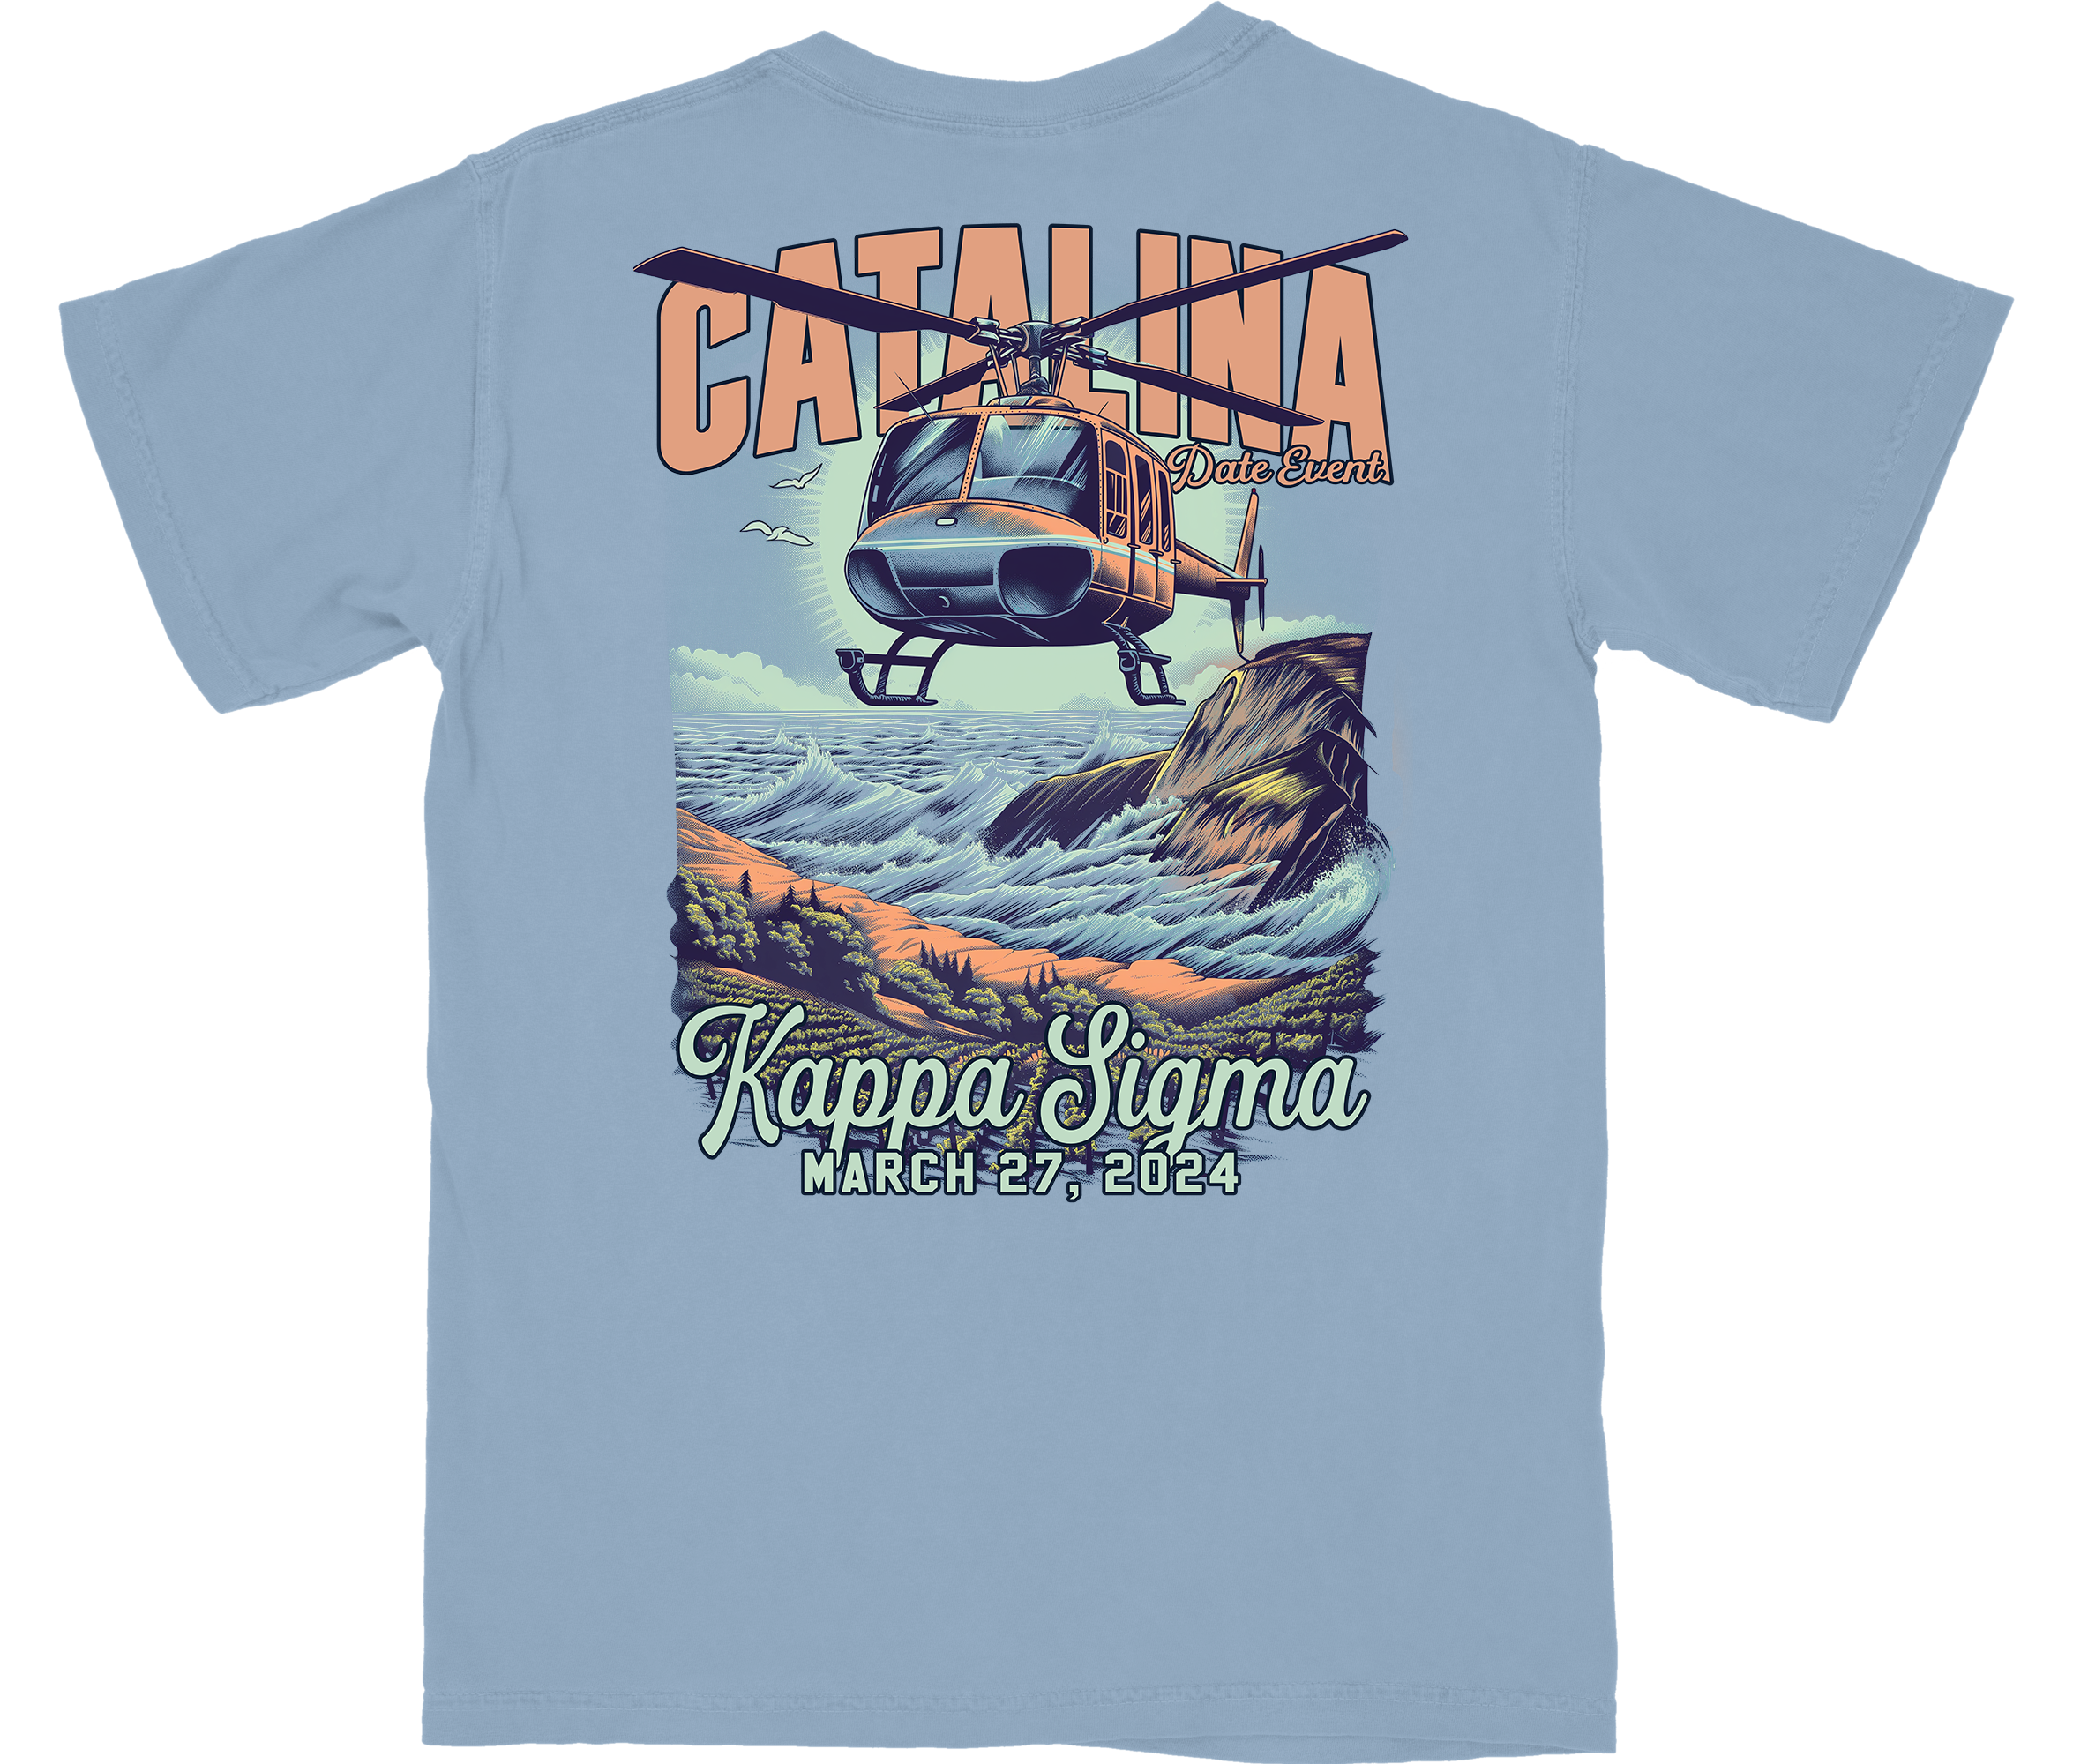 Catalina Date Event Shirt